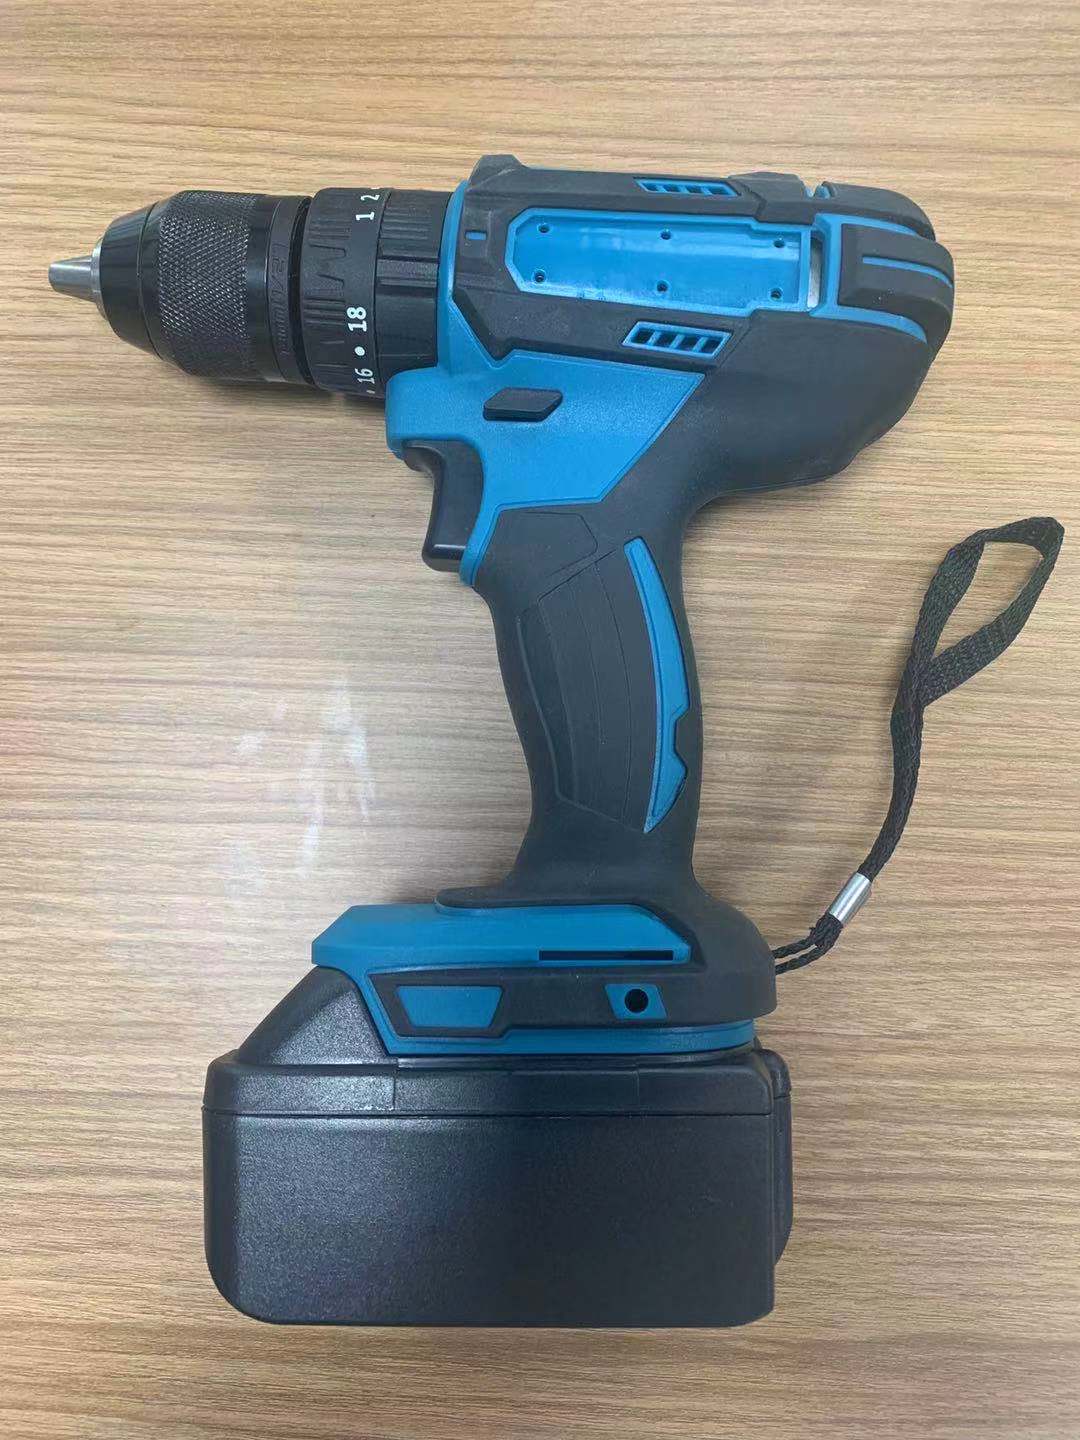 Power drill, hardware tool